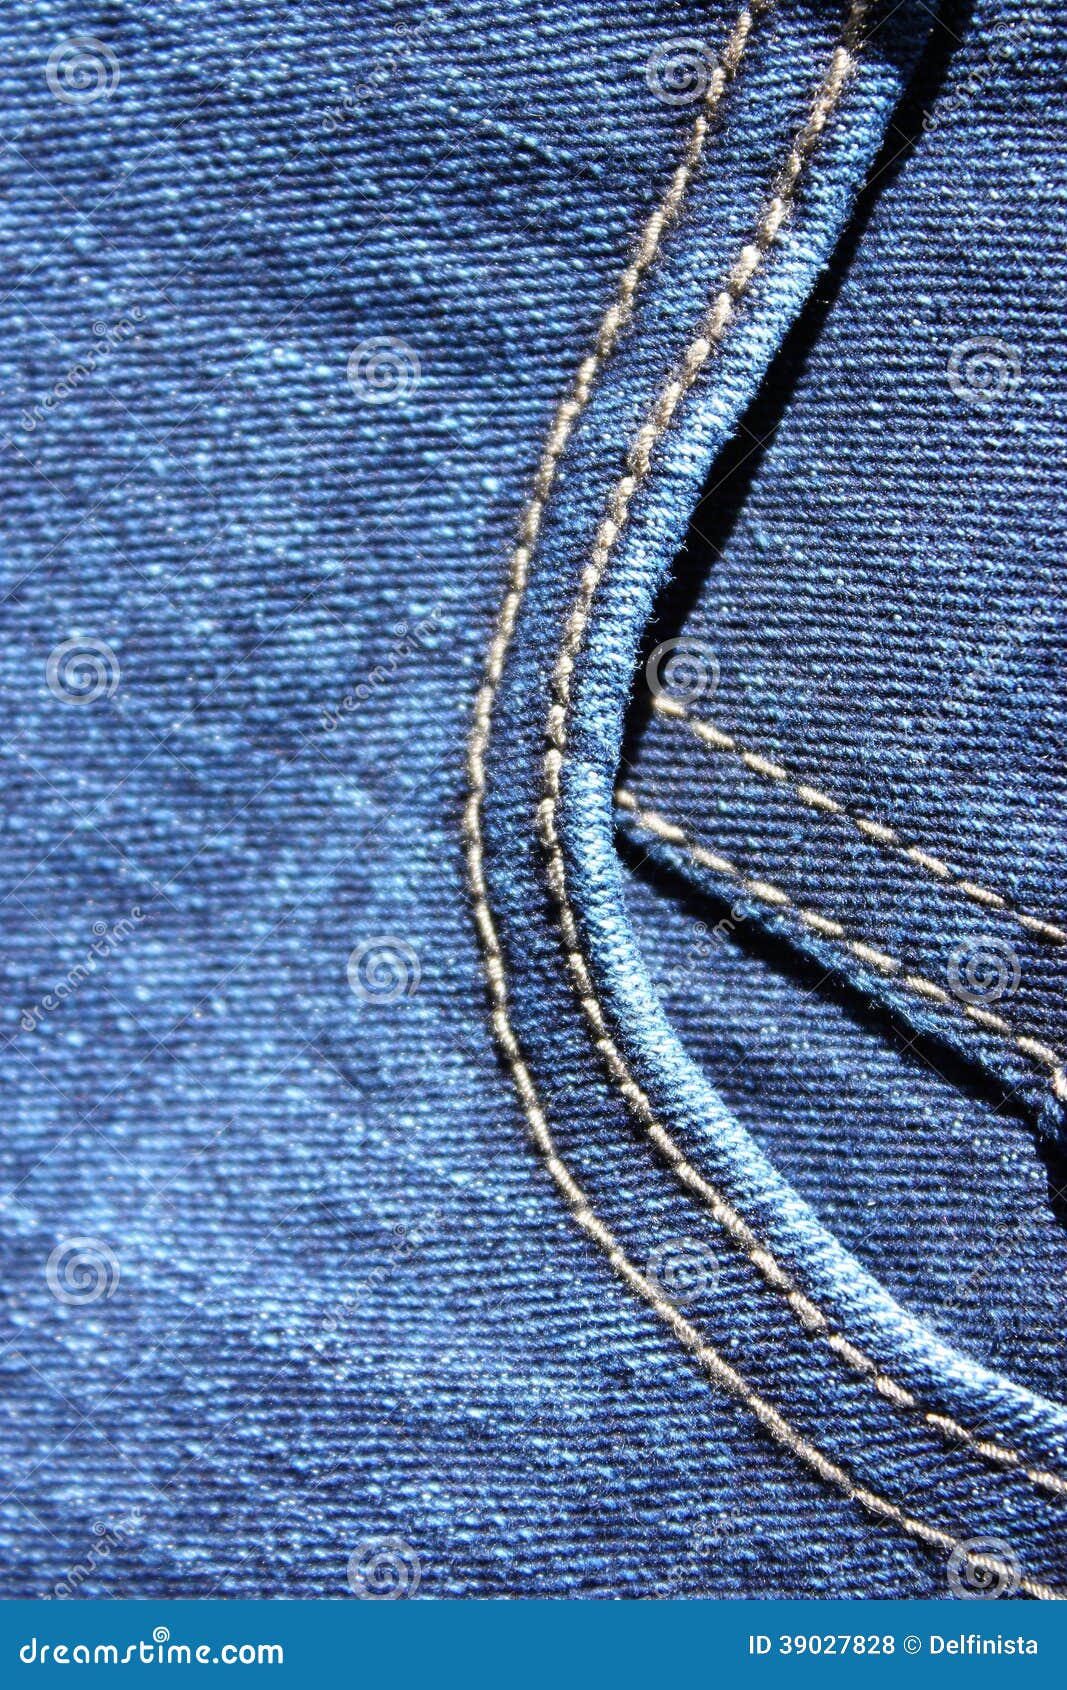 Jeans Background Images - Free Download on Freepik